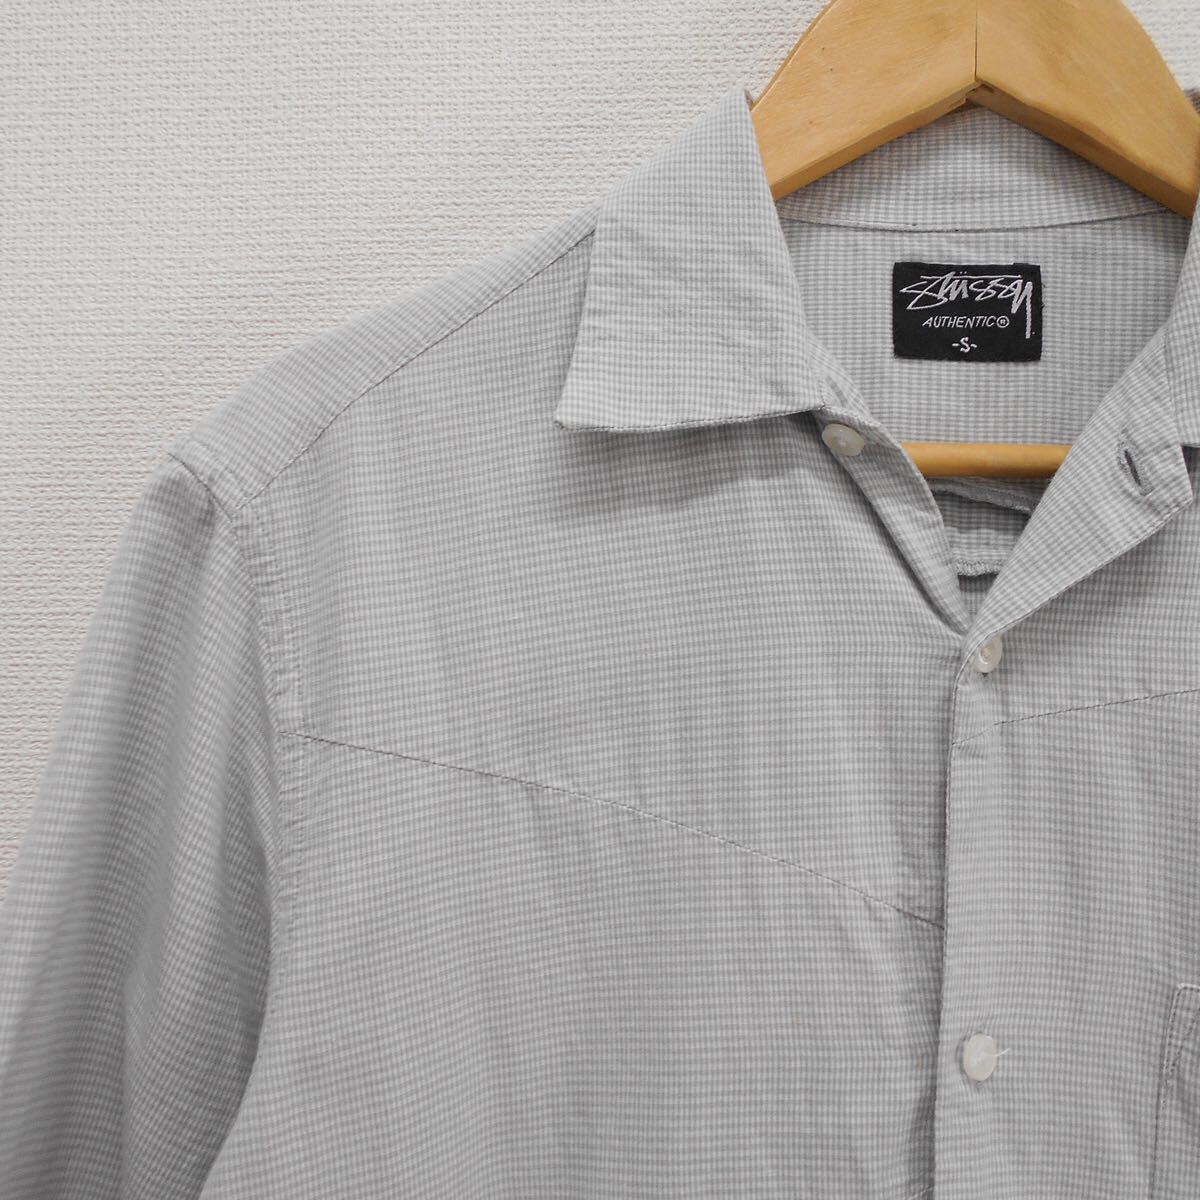 STUSSY ステューシー 半袖 オープンカラーシャツ 半袖シャツ チェック S 10116500